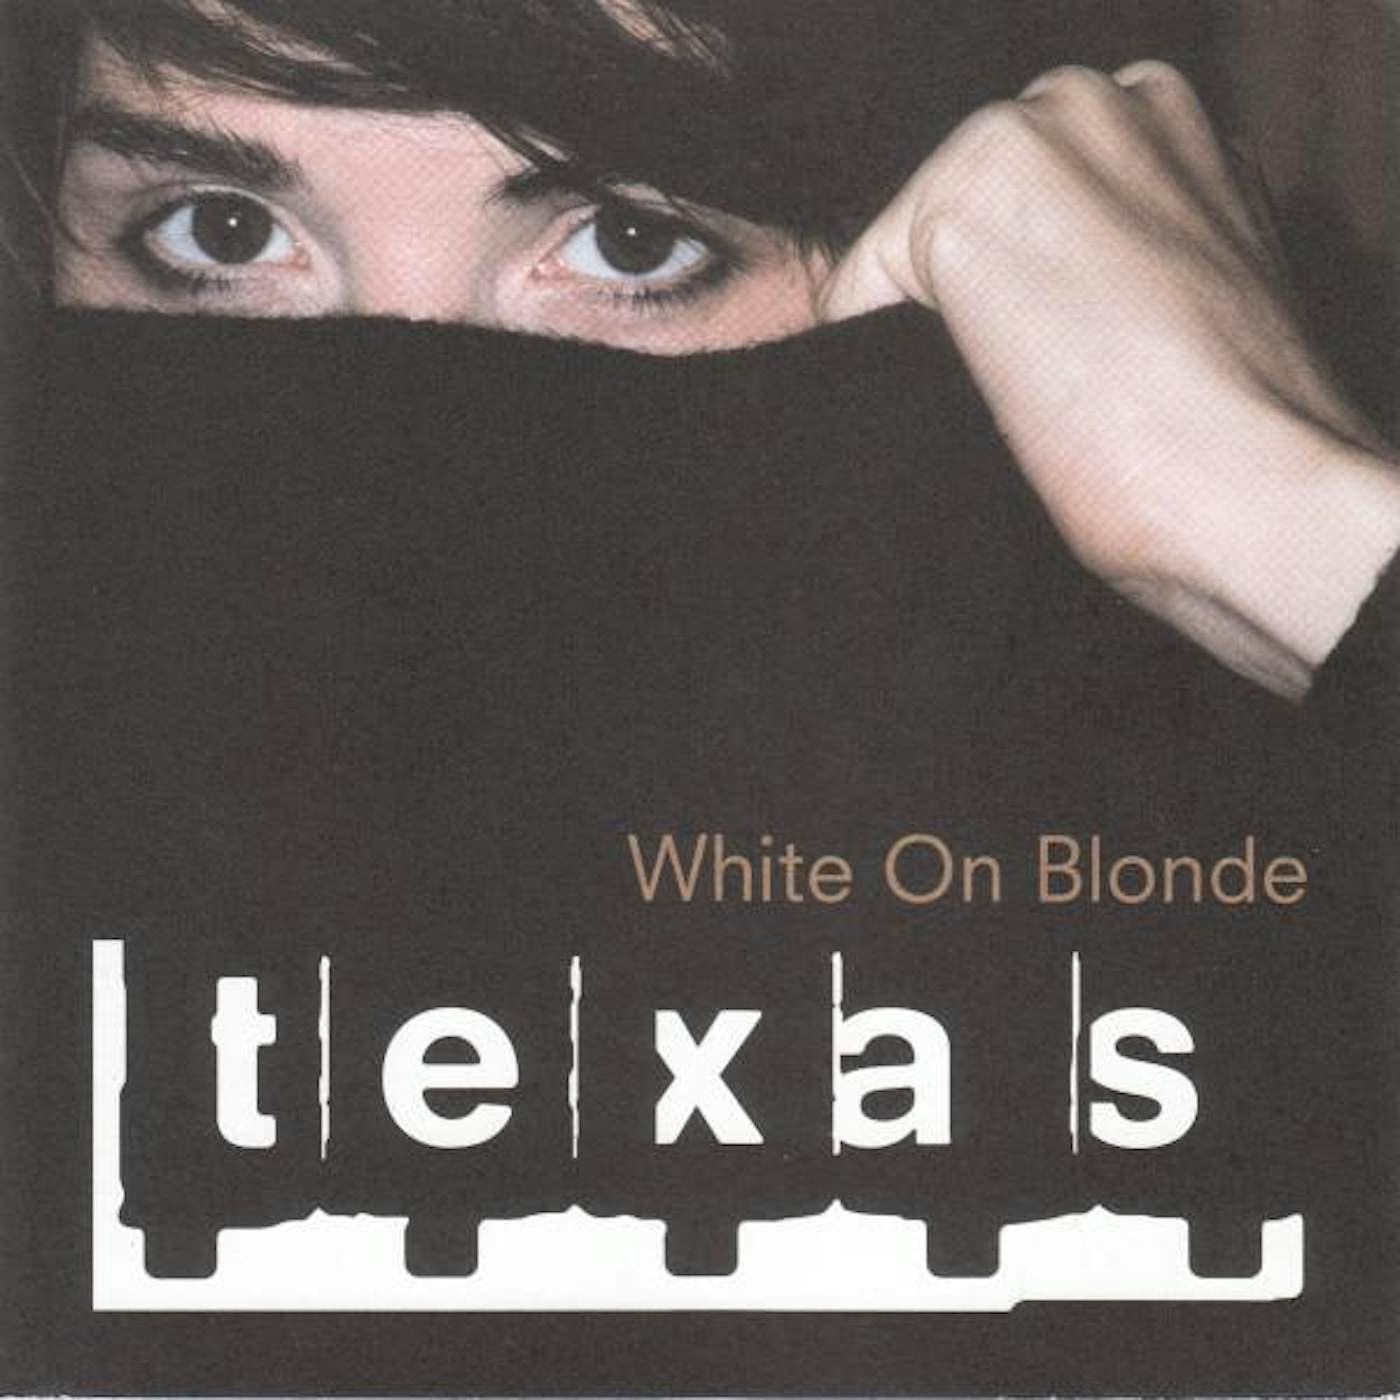 Texas WHITE ON BLONDE CD